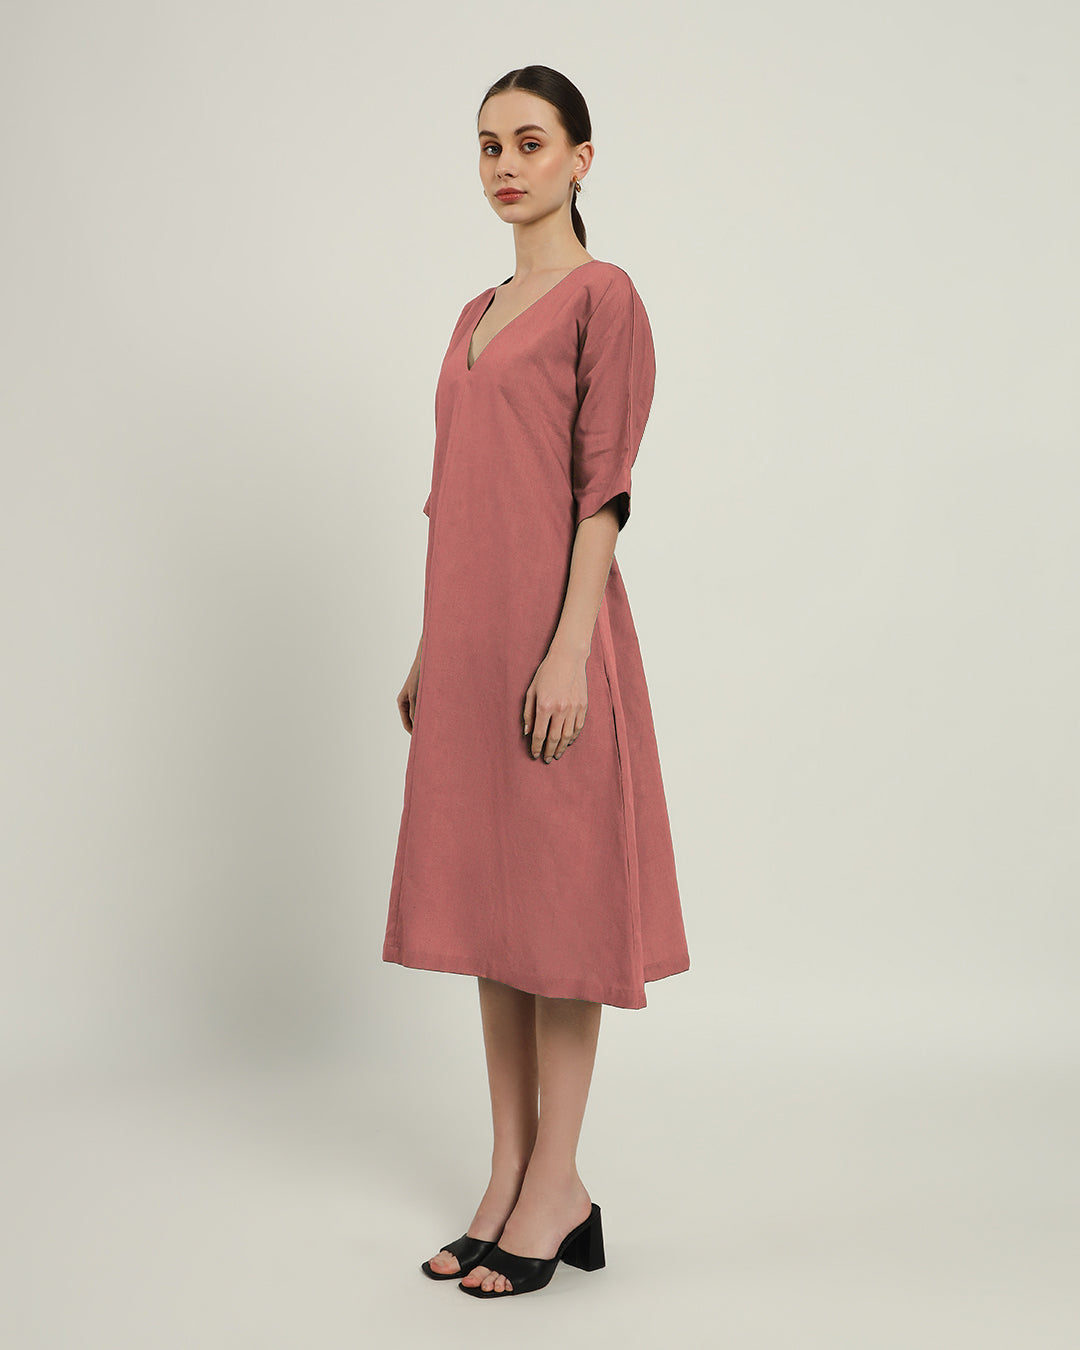 The Mildura Ivory Pink Cotton Dress